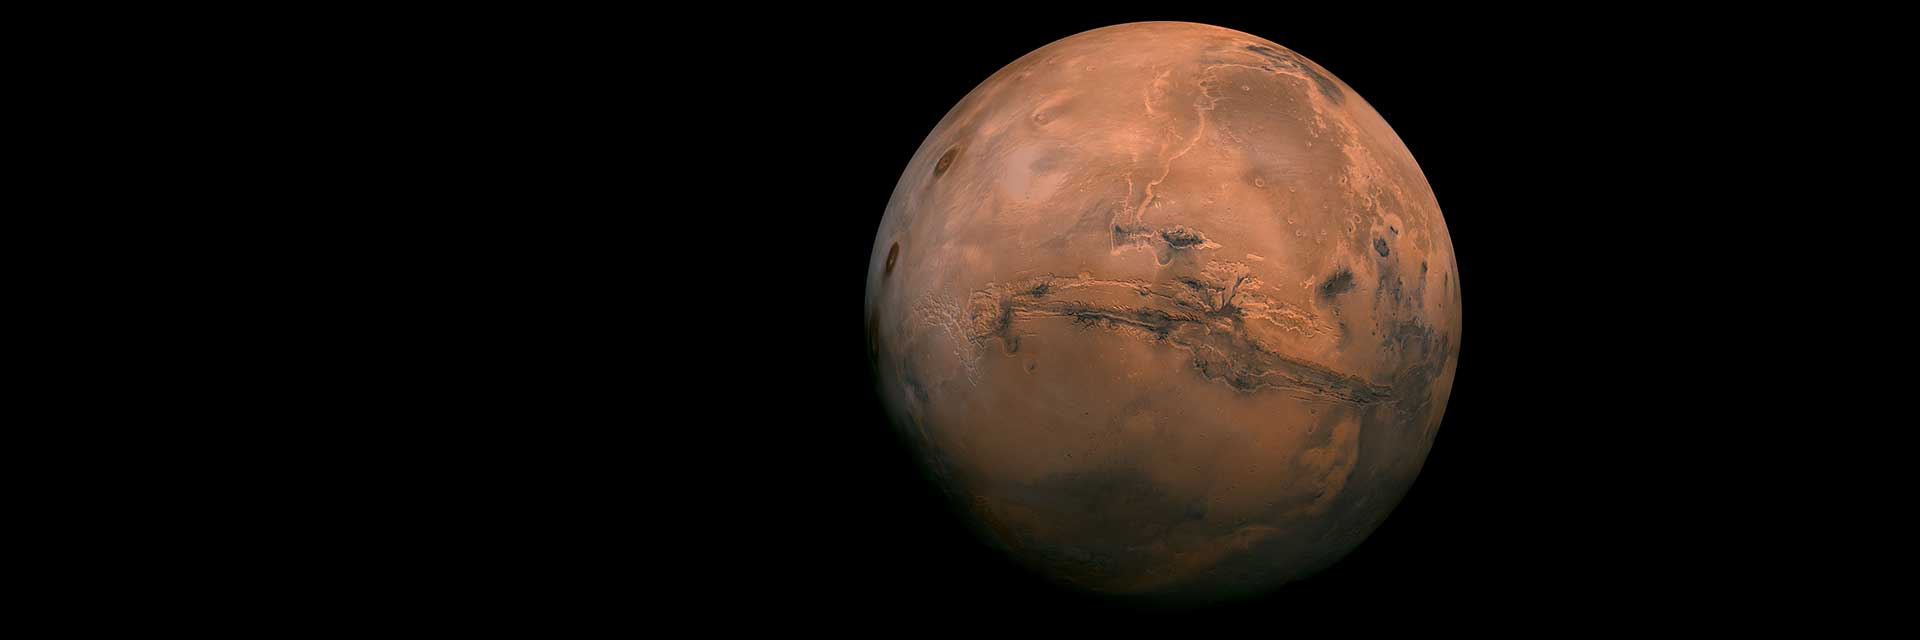 A full globe view of Mars